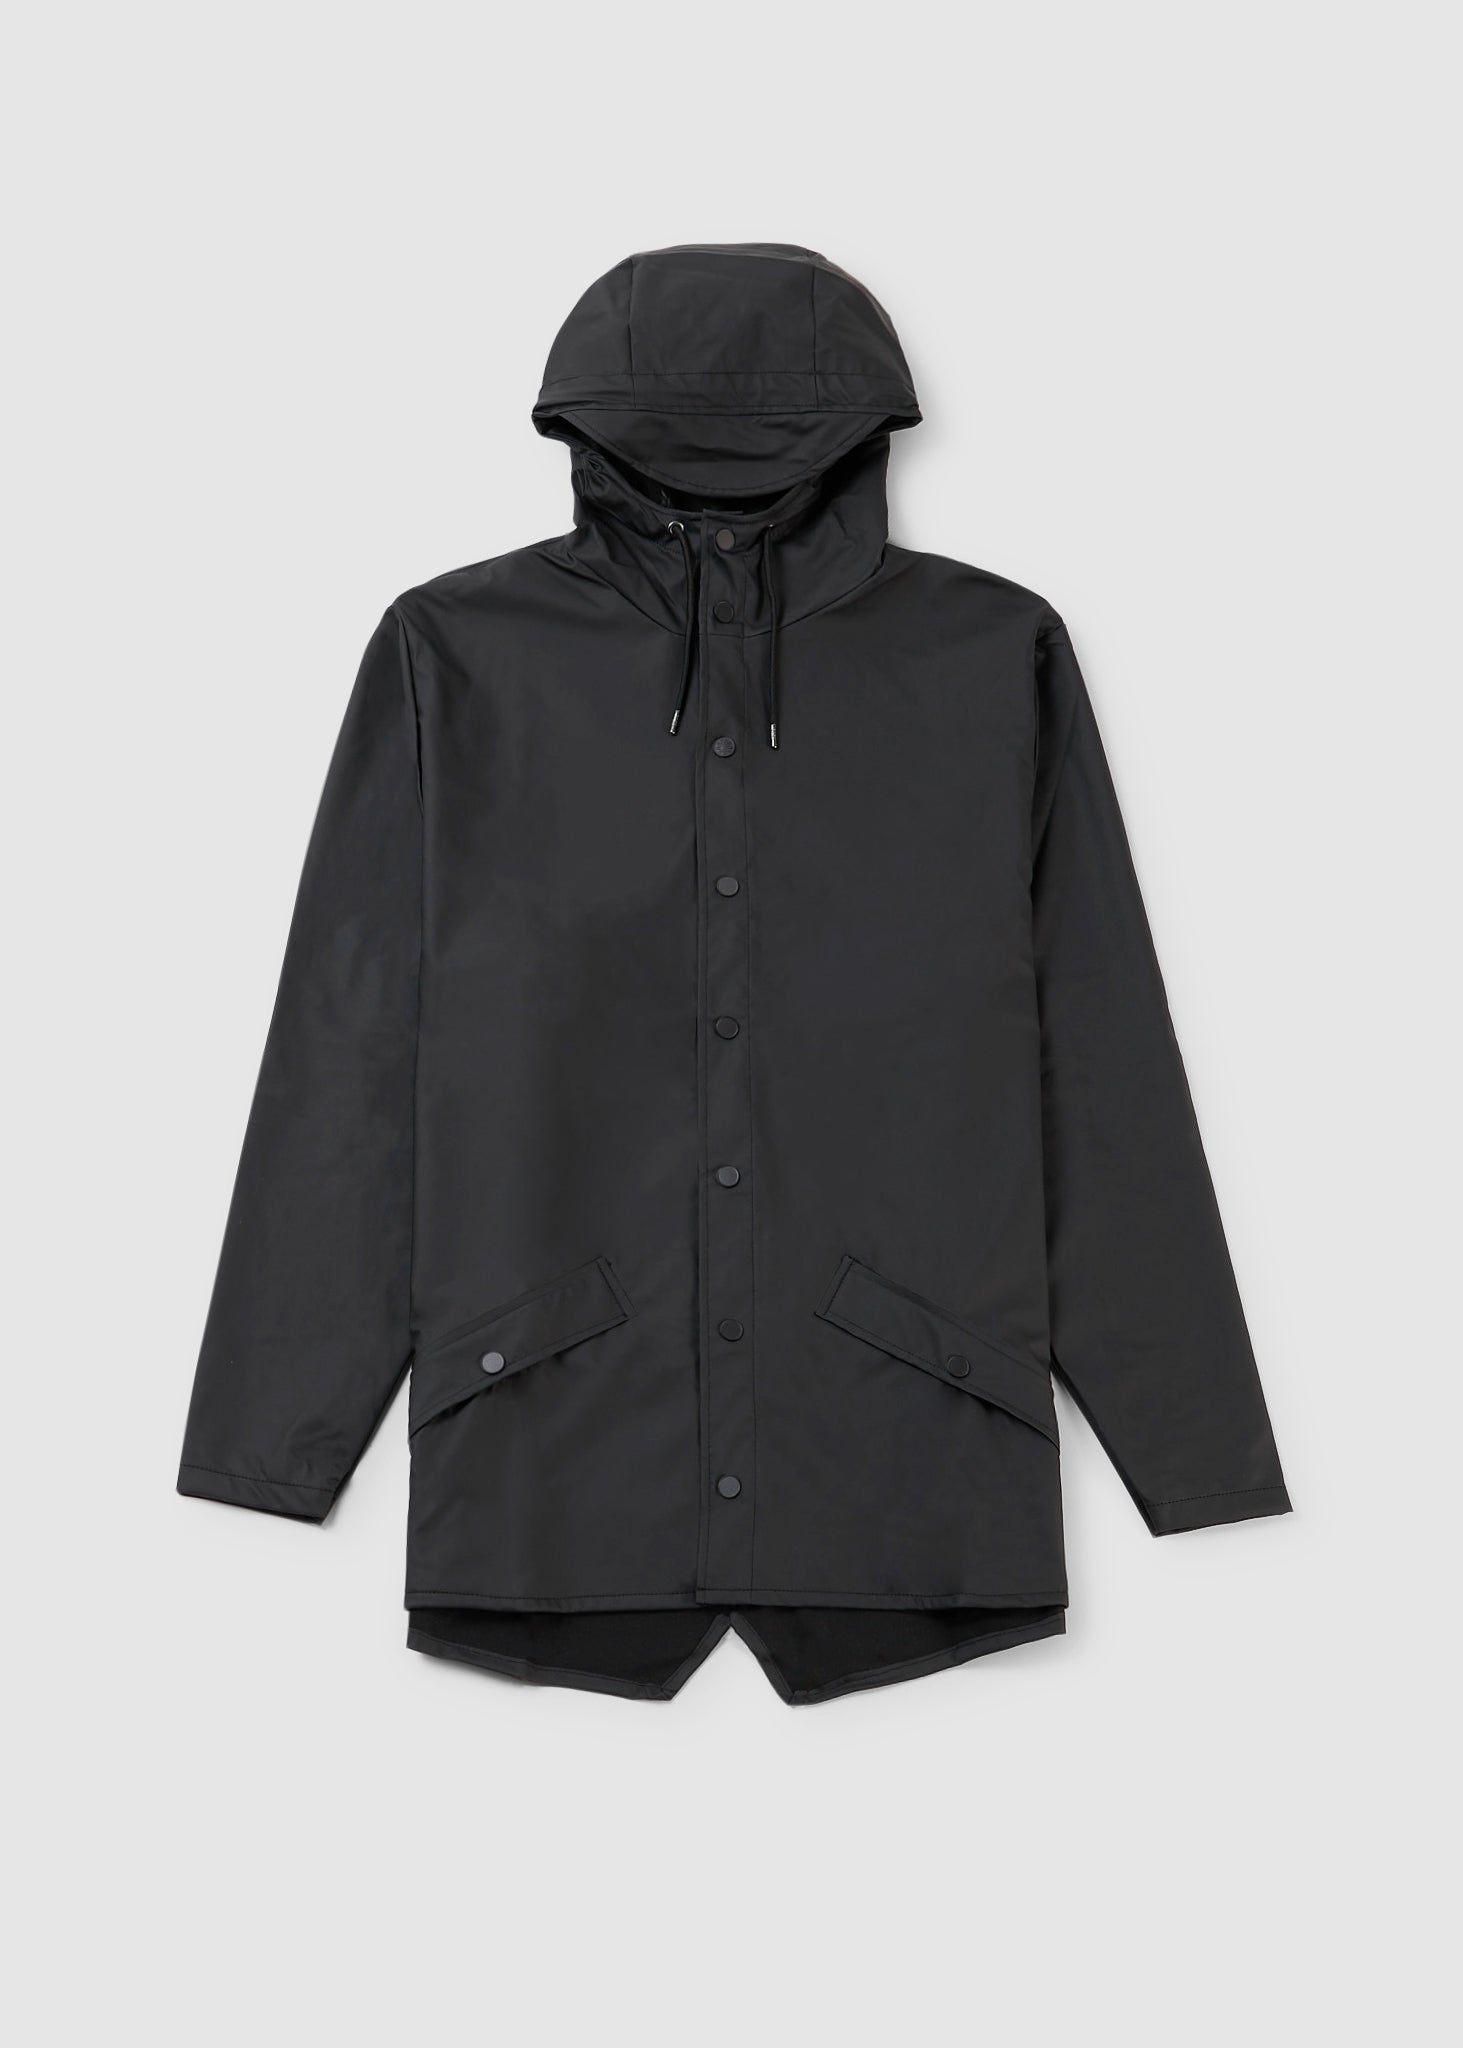 Image of Rains Mens Jacket W3 In Black